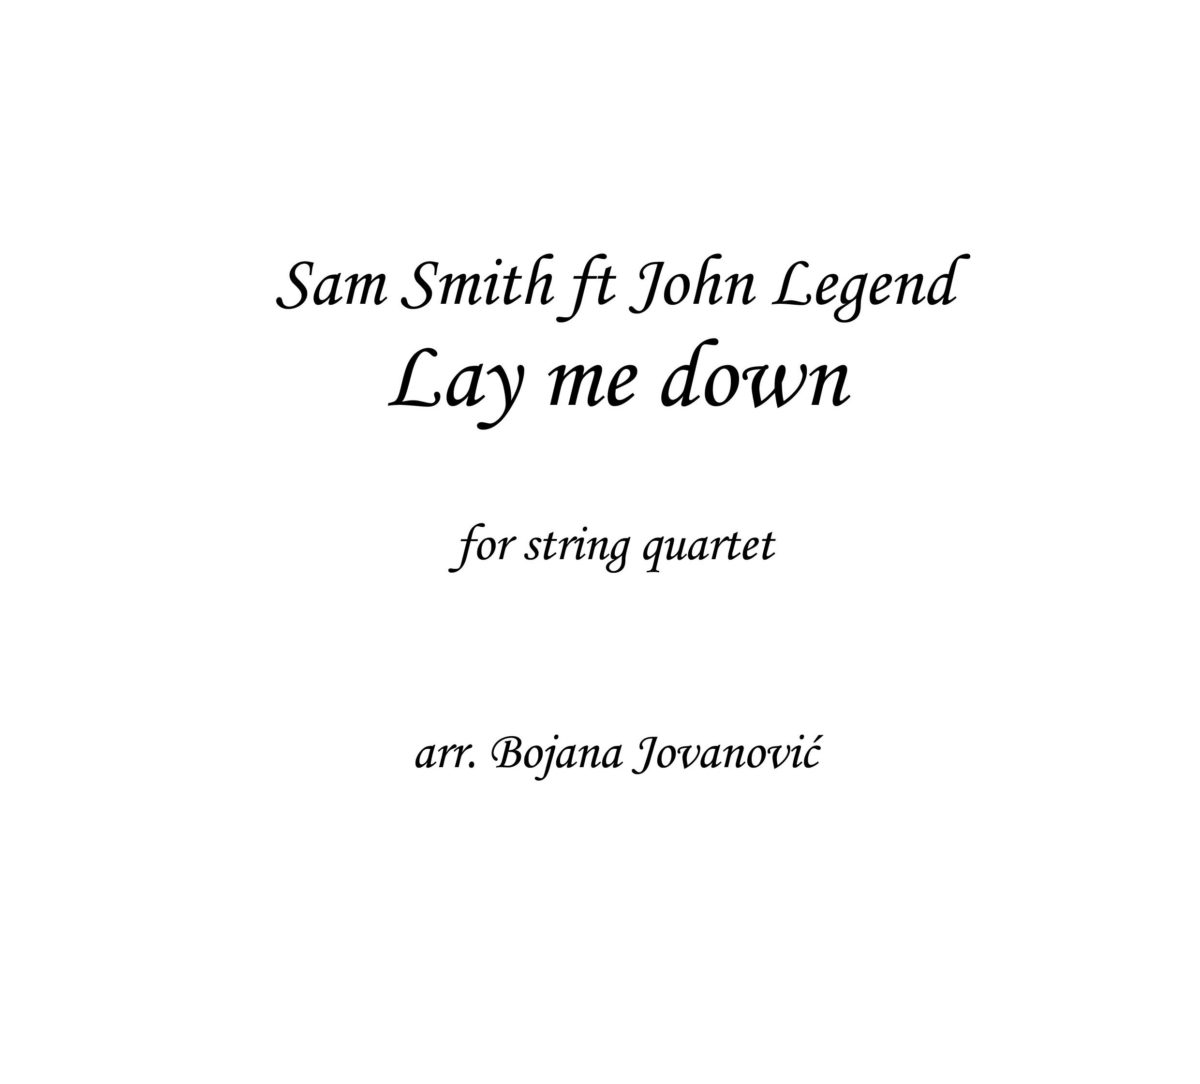 Lay me down (Sam Smith ft John Legend) - Sheet Music